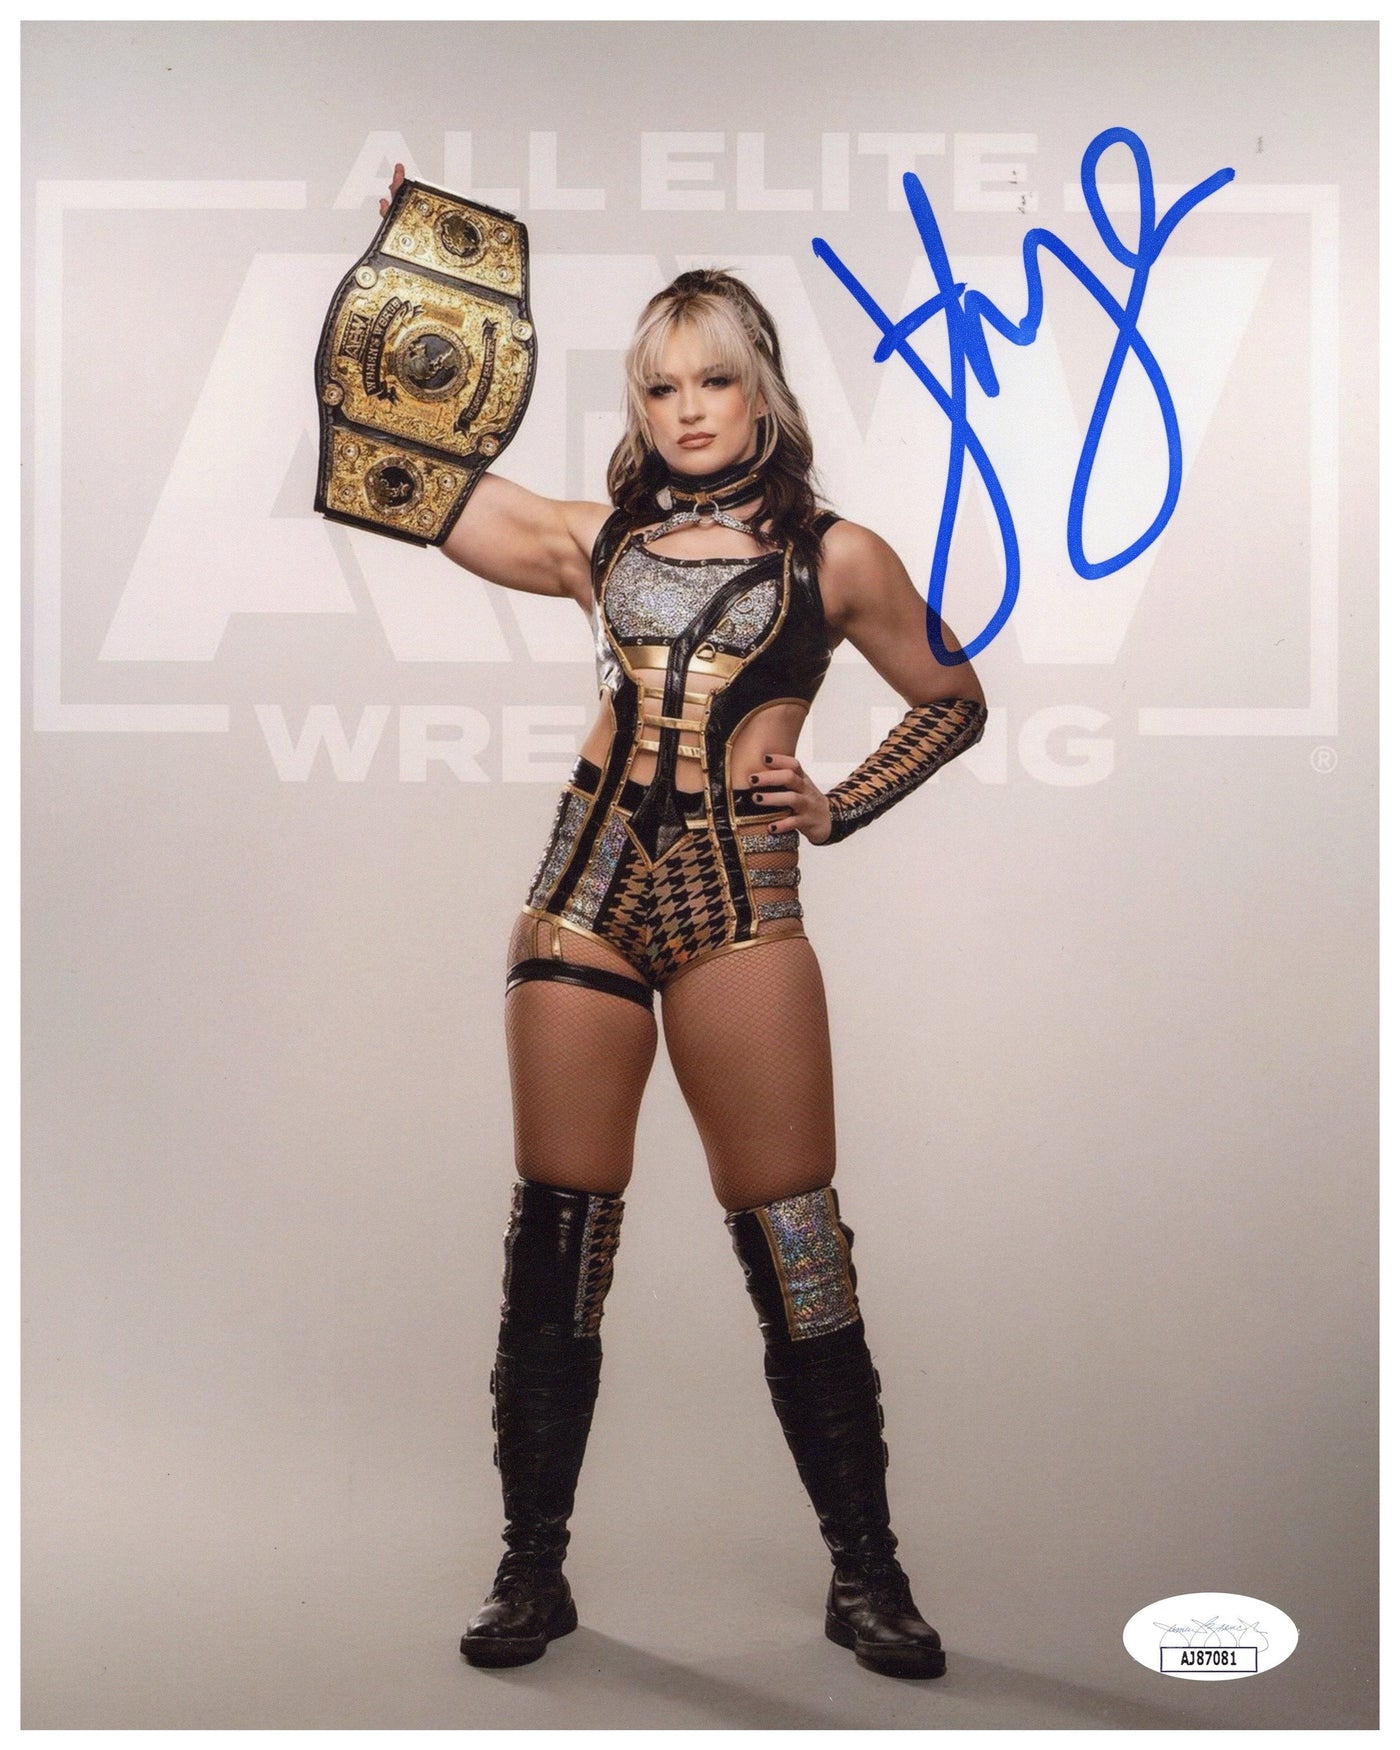 Jamie Hayter Signed 8x10 Photo AEW Pro Wrestling Autographed JSA COA #2